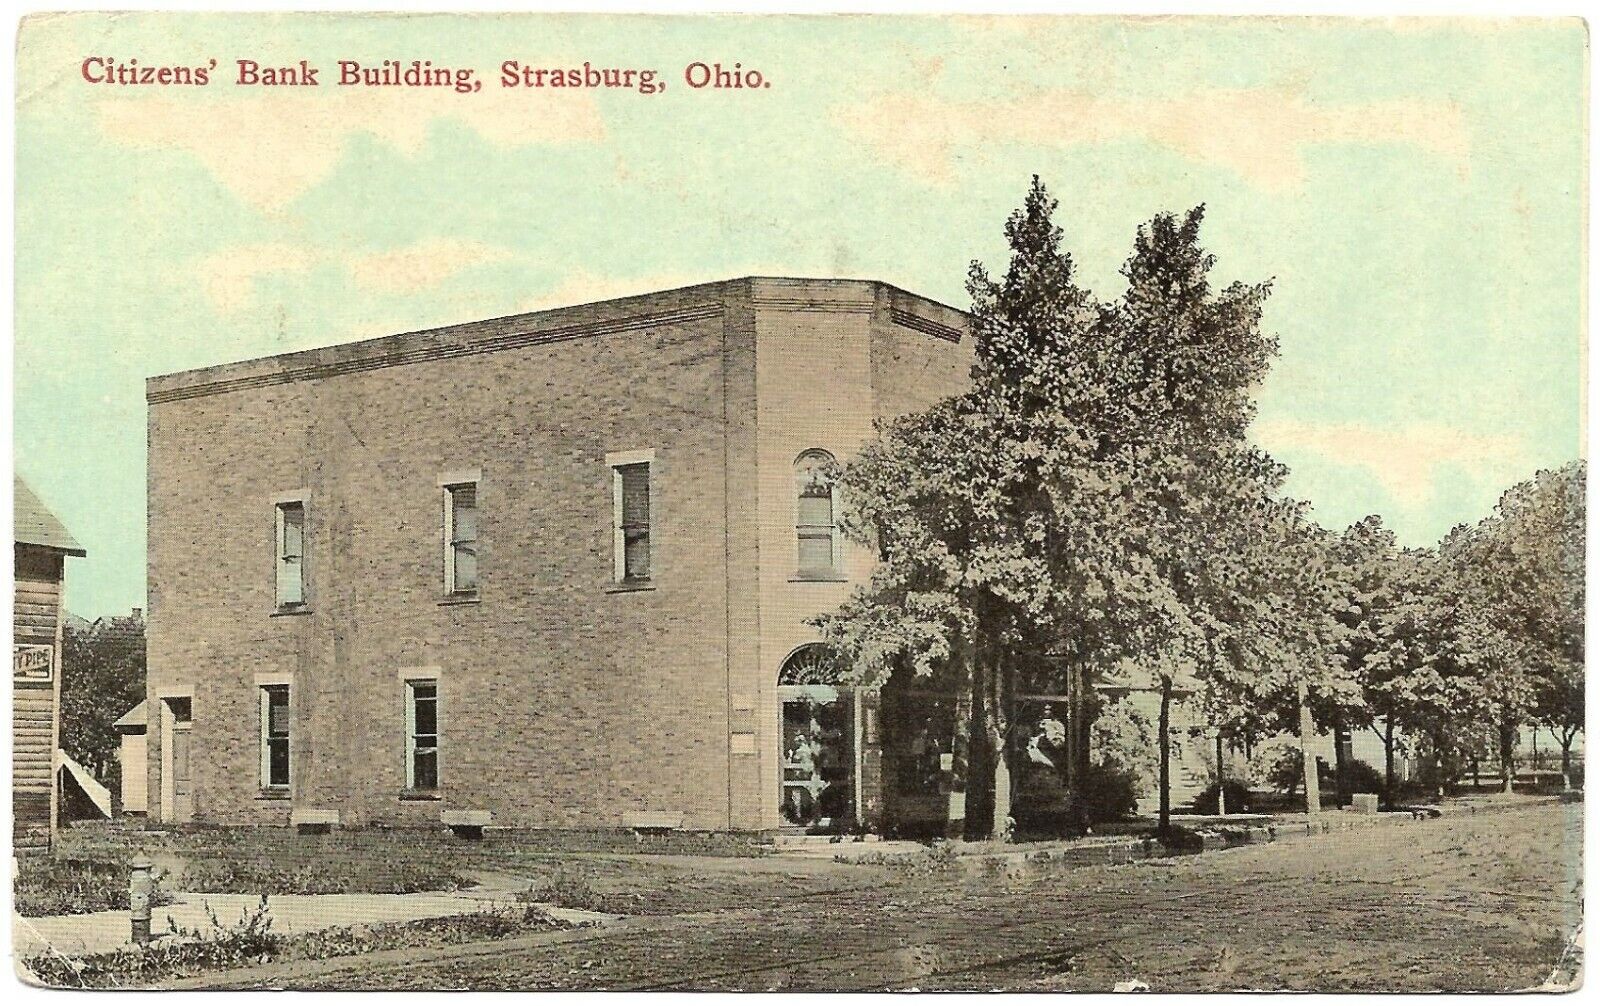 1914 Strasburg Ohio Postcard Citizens' Bank Building Dundee Ohio Cleveland 